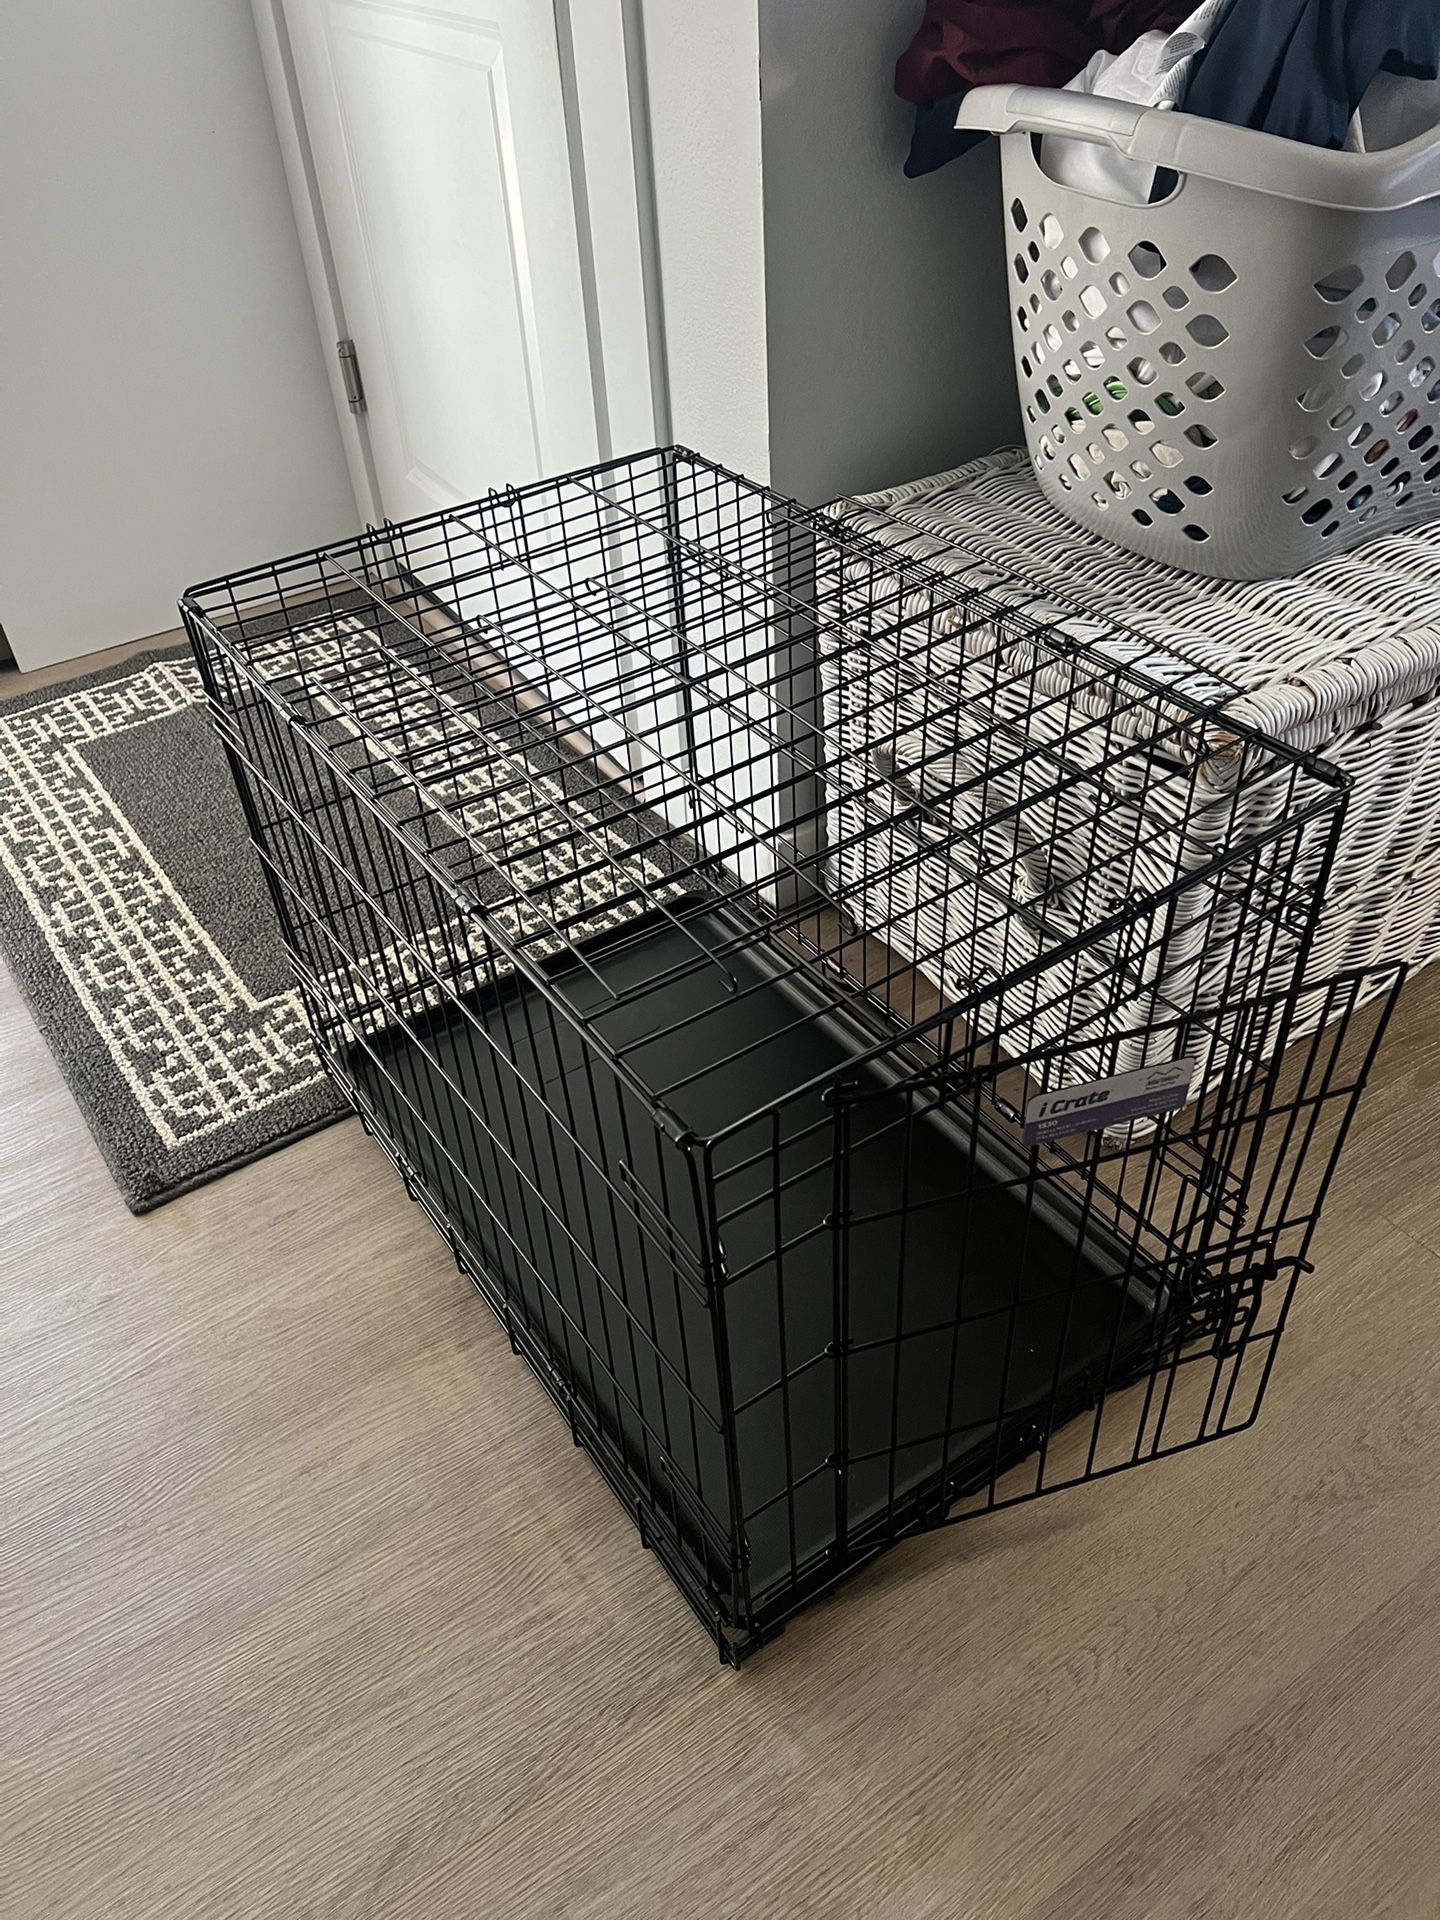 Medium Size Metal Dog Crate 